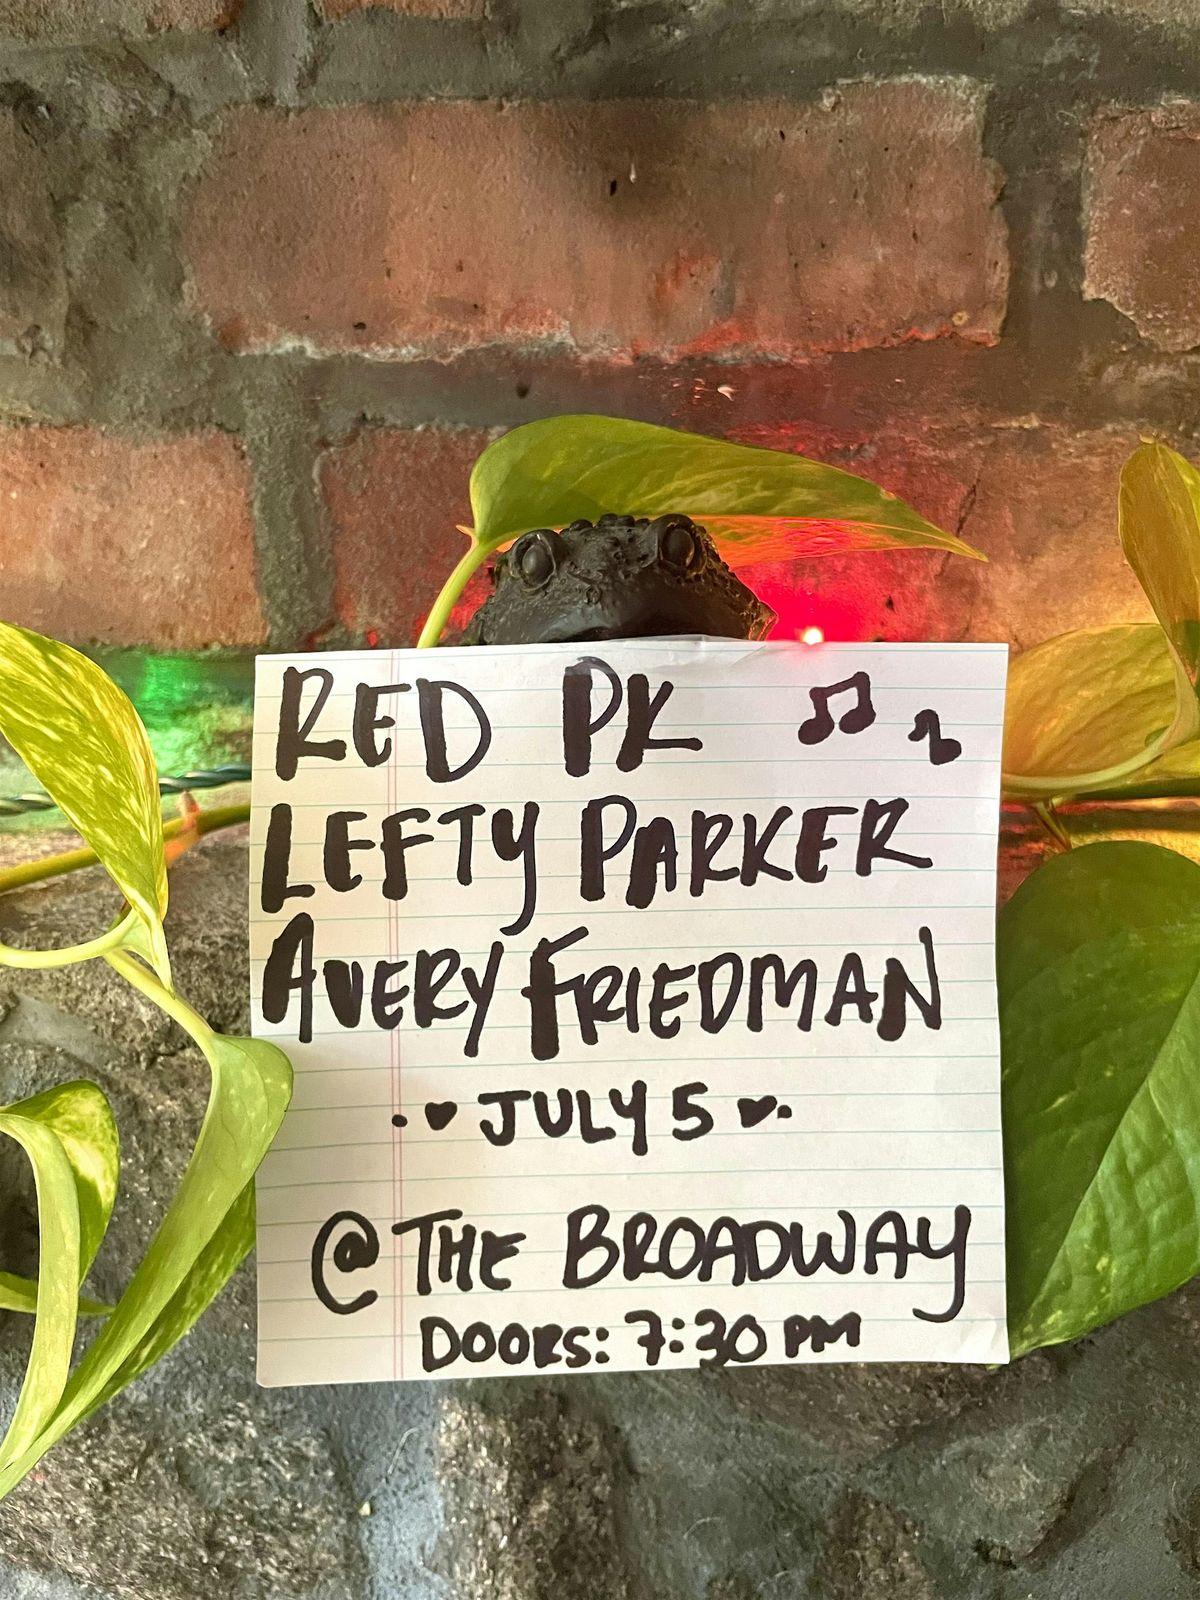 Avery Friedman w\/ Lefty Parker + Red PK